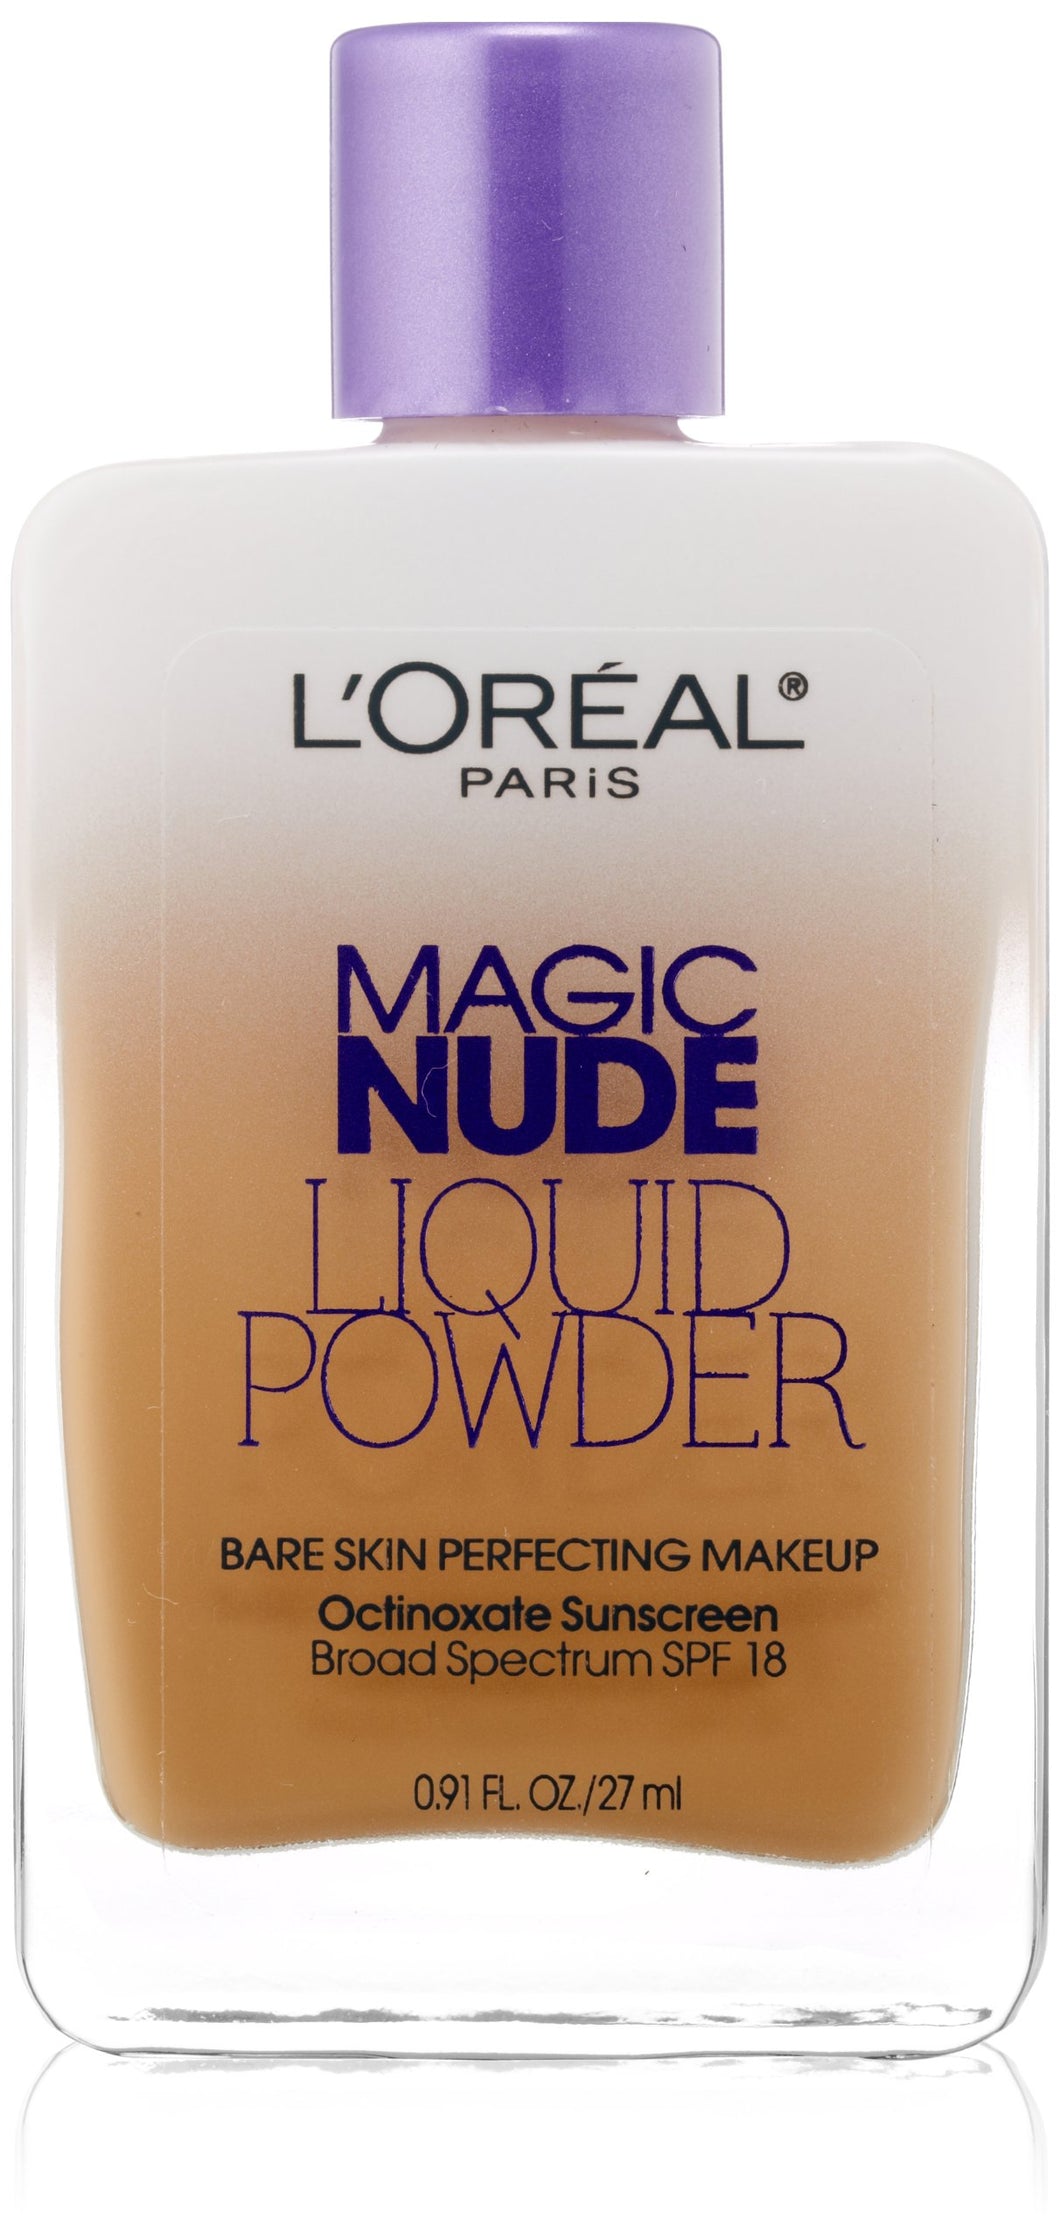 L'Oreal Paris Magic Nude Liquid Powder Bare Skin Perfecting Makeup SPF 18, Bu...